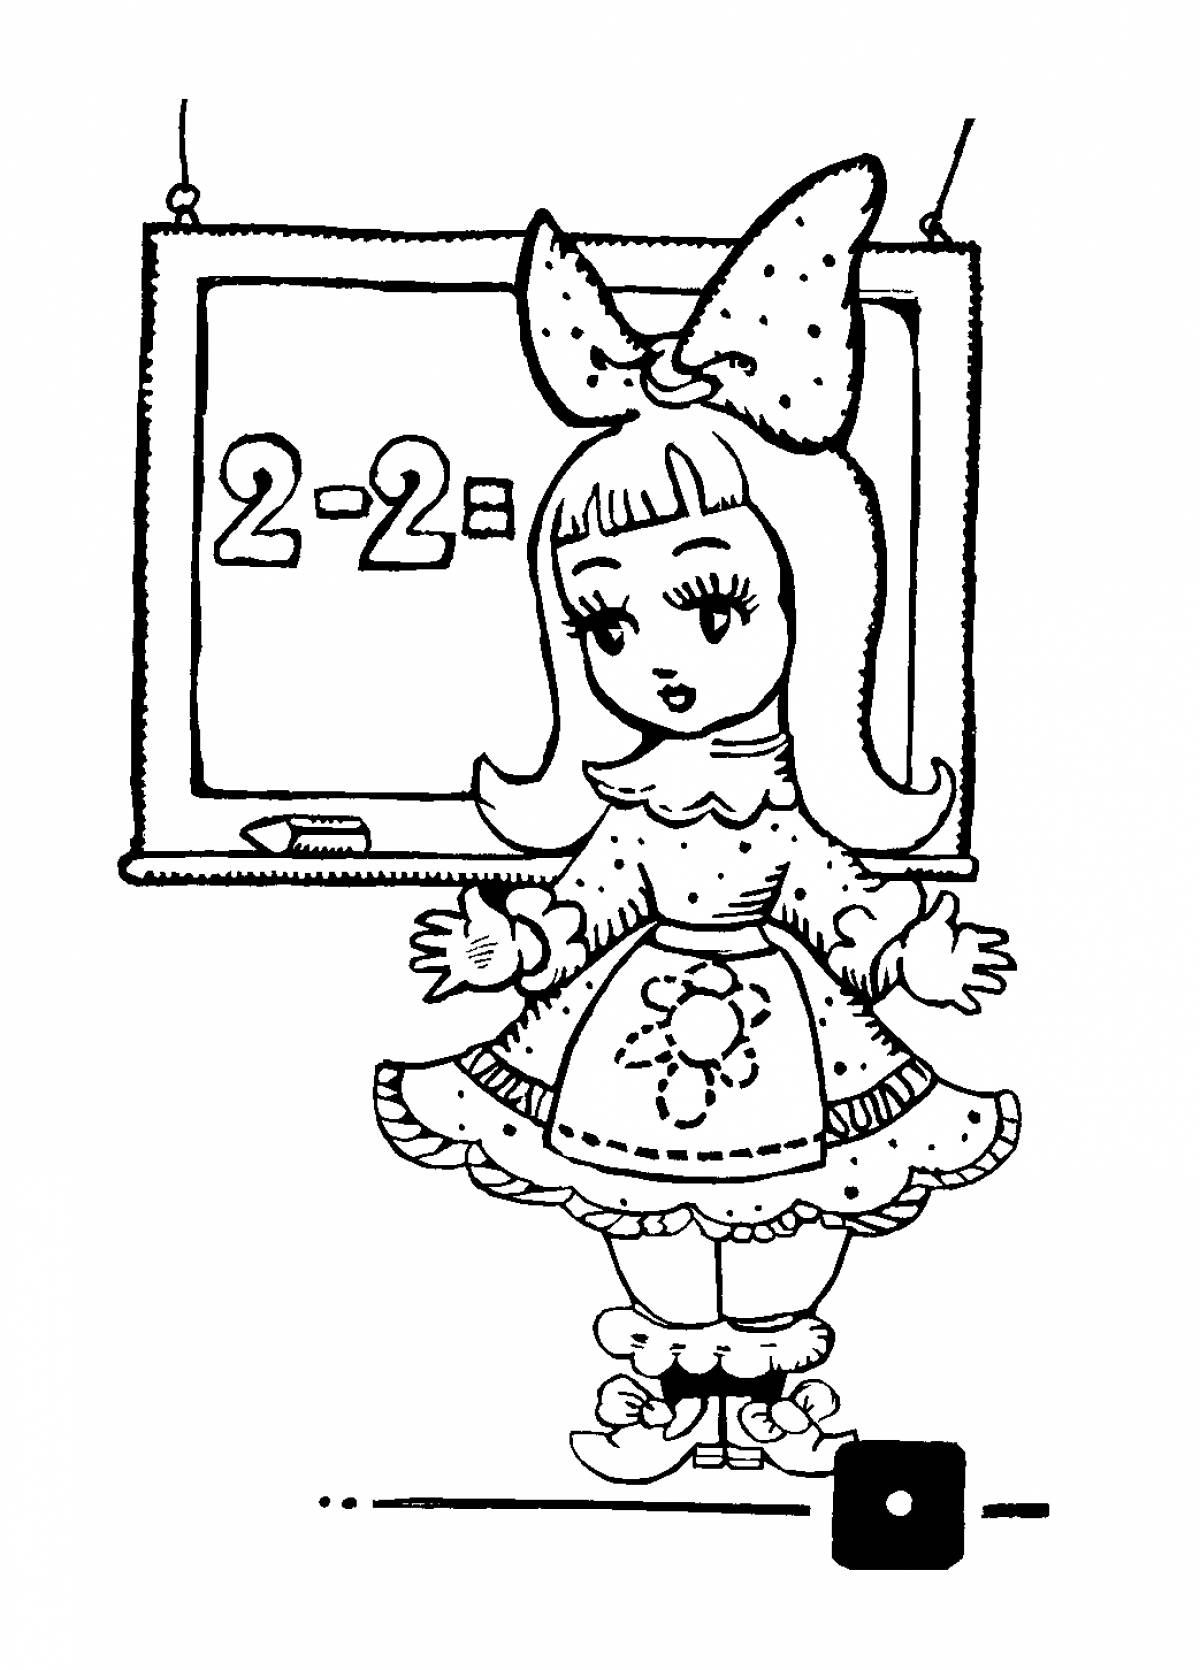 Malvina teaches counting